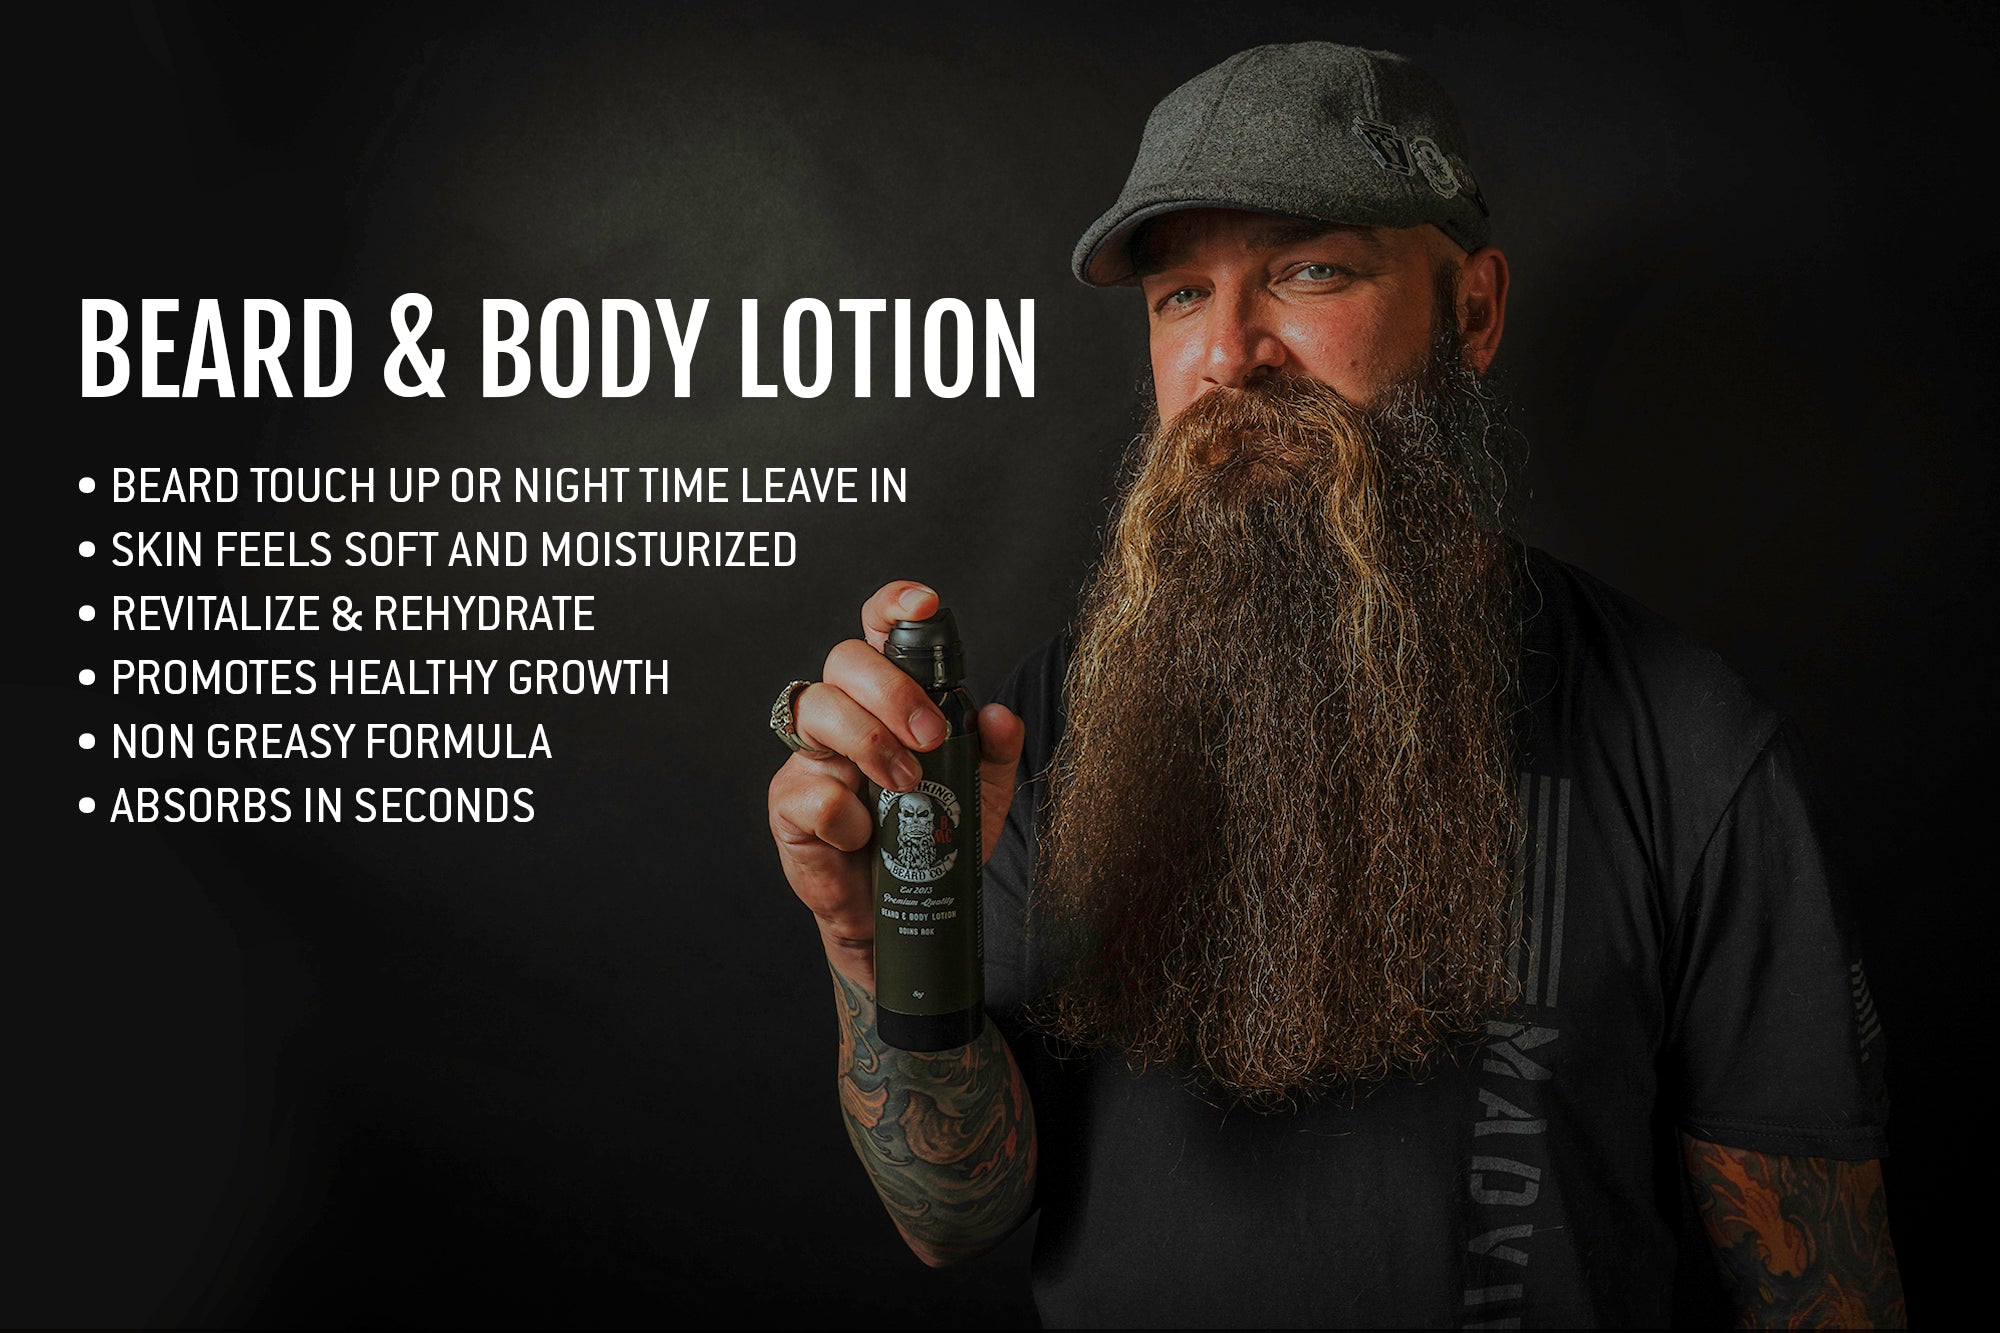 Beard Lotion Benefits